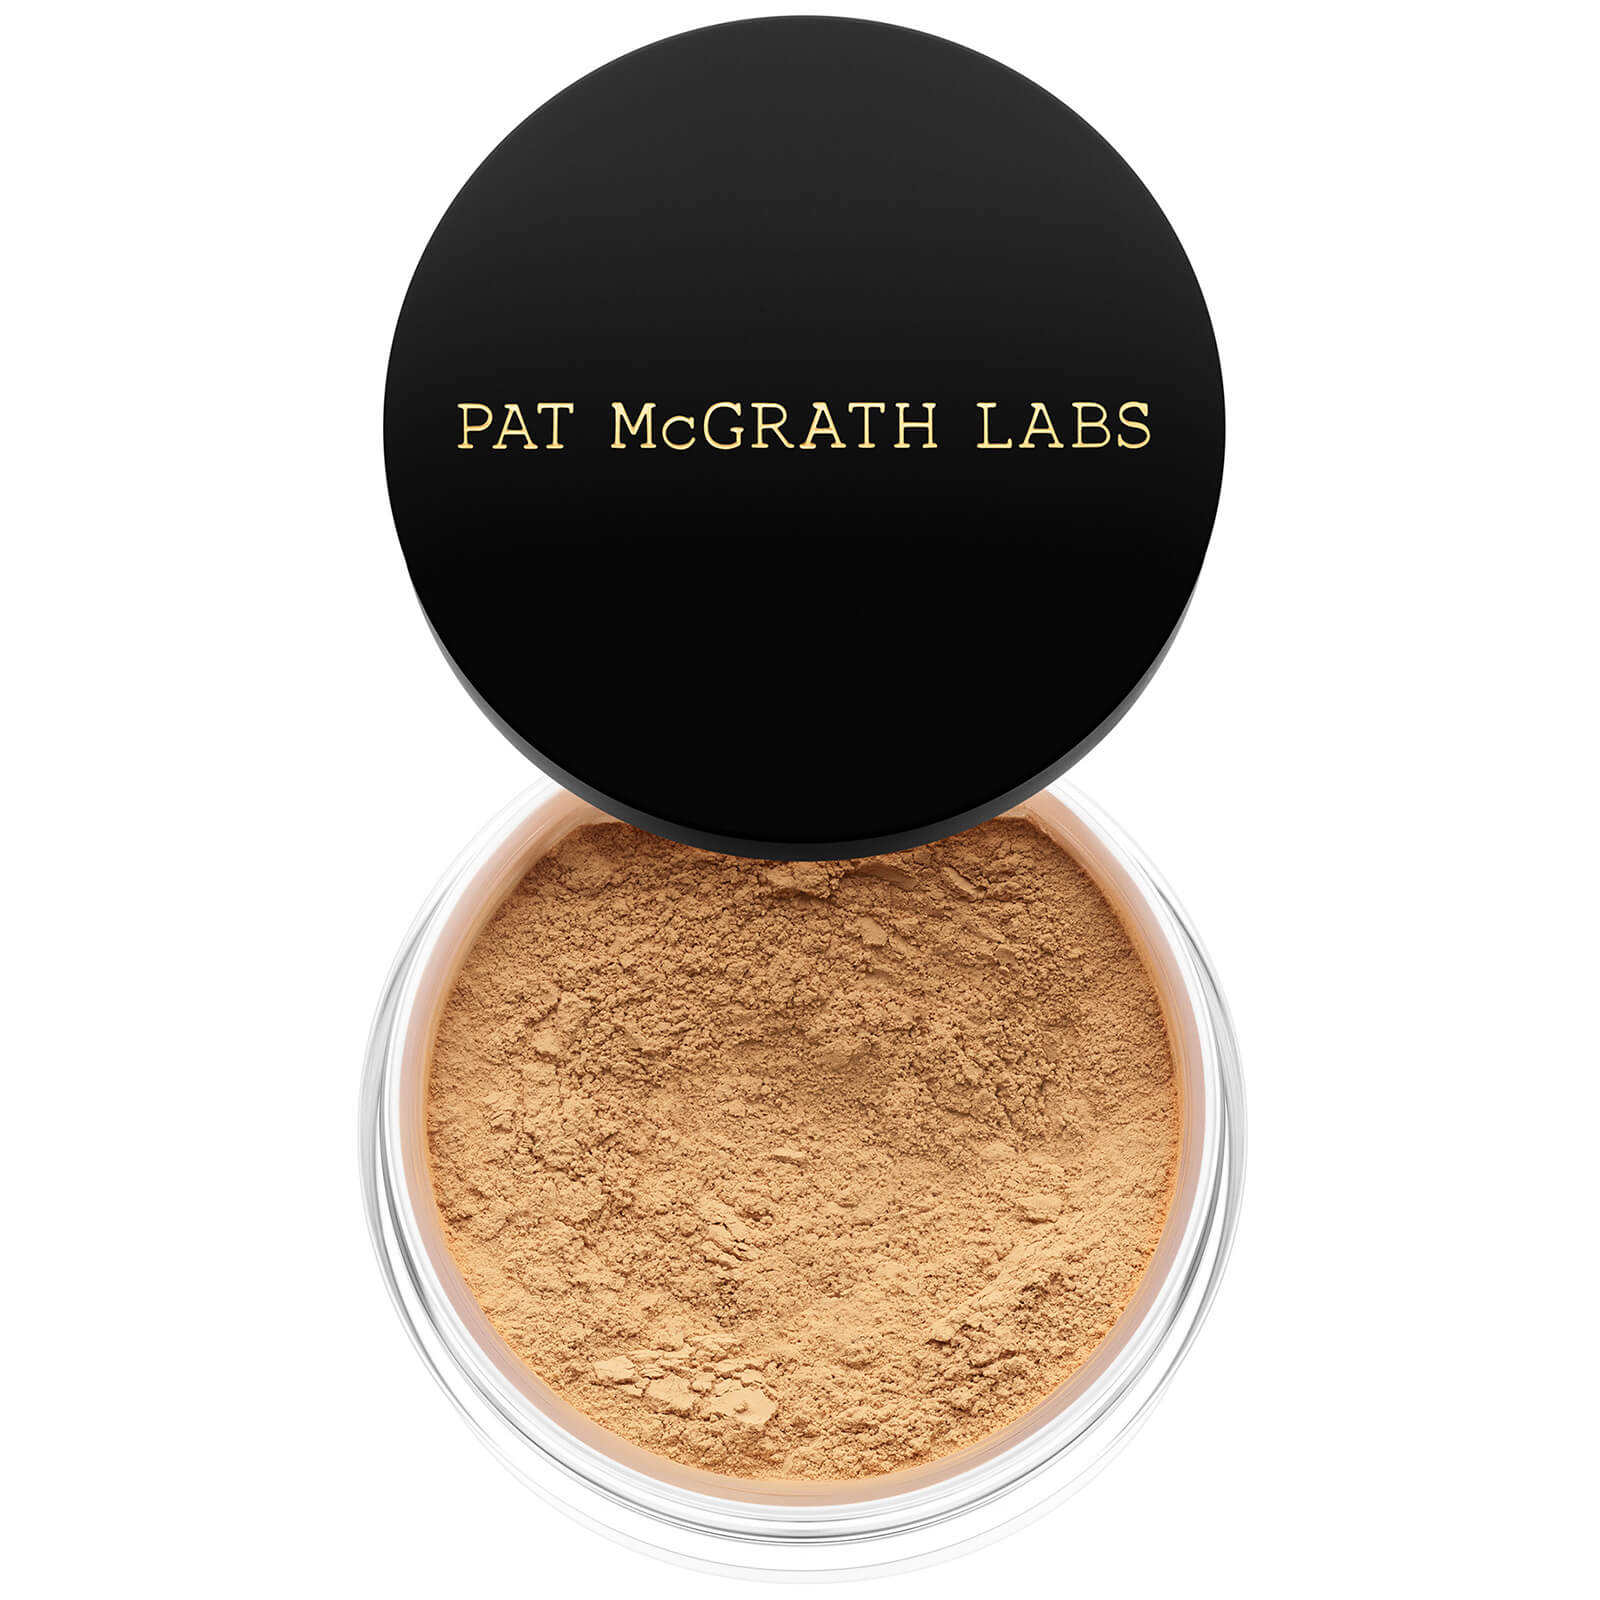 Pat Mcgrath Labs Skin Fetish: Sublime Perfection Setting Powder 8.5g (various Shades) - Medium 3